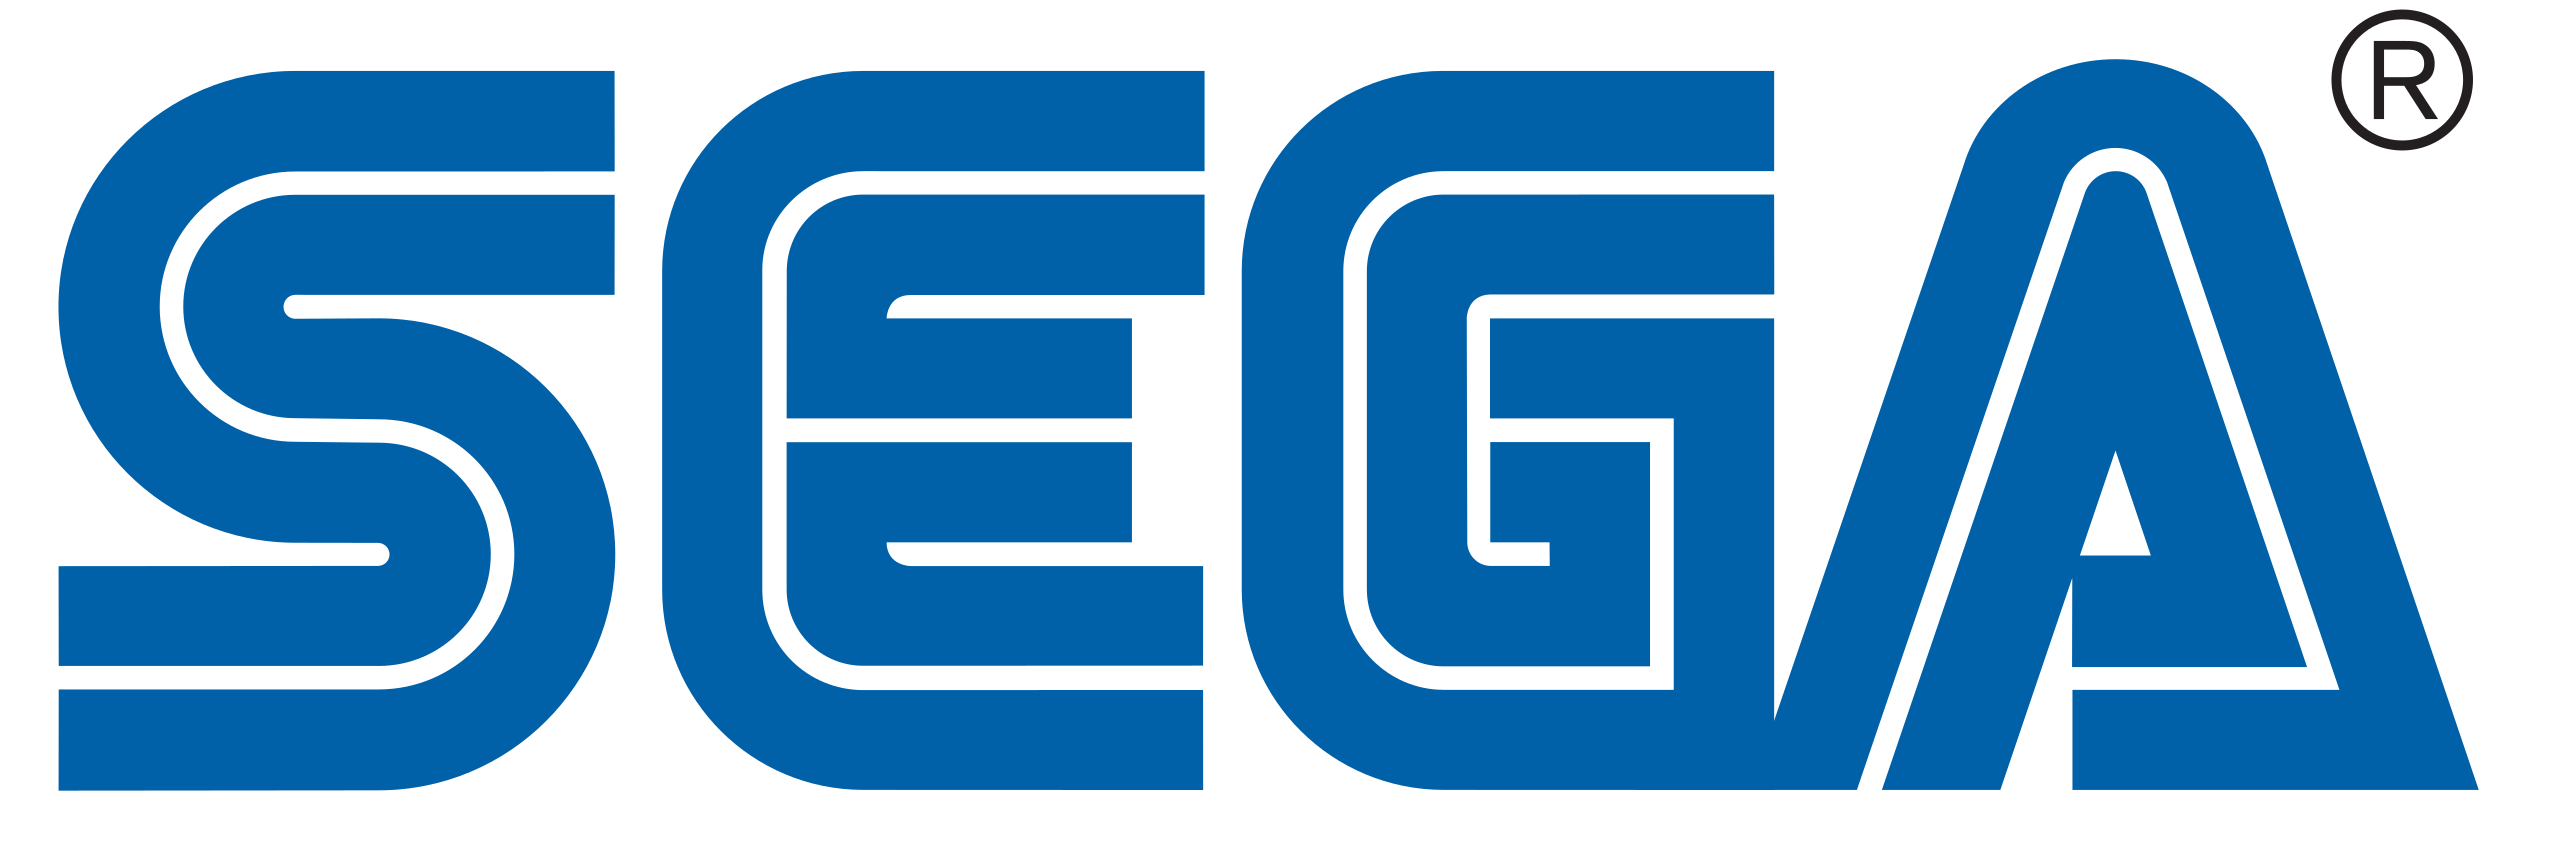 Sega logo - a picture of the Sega logo